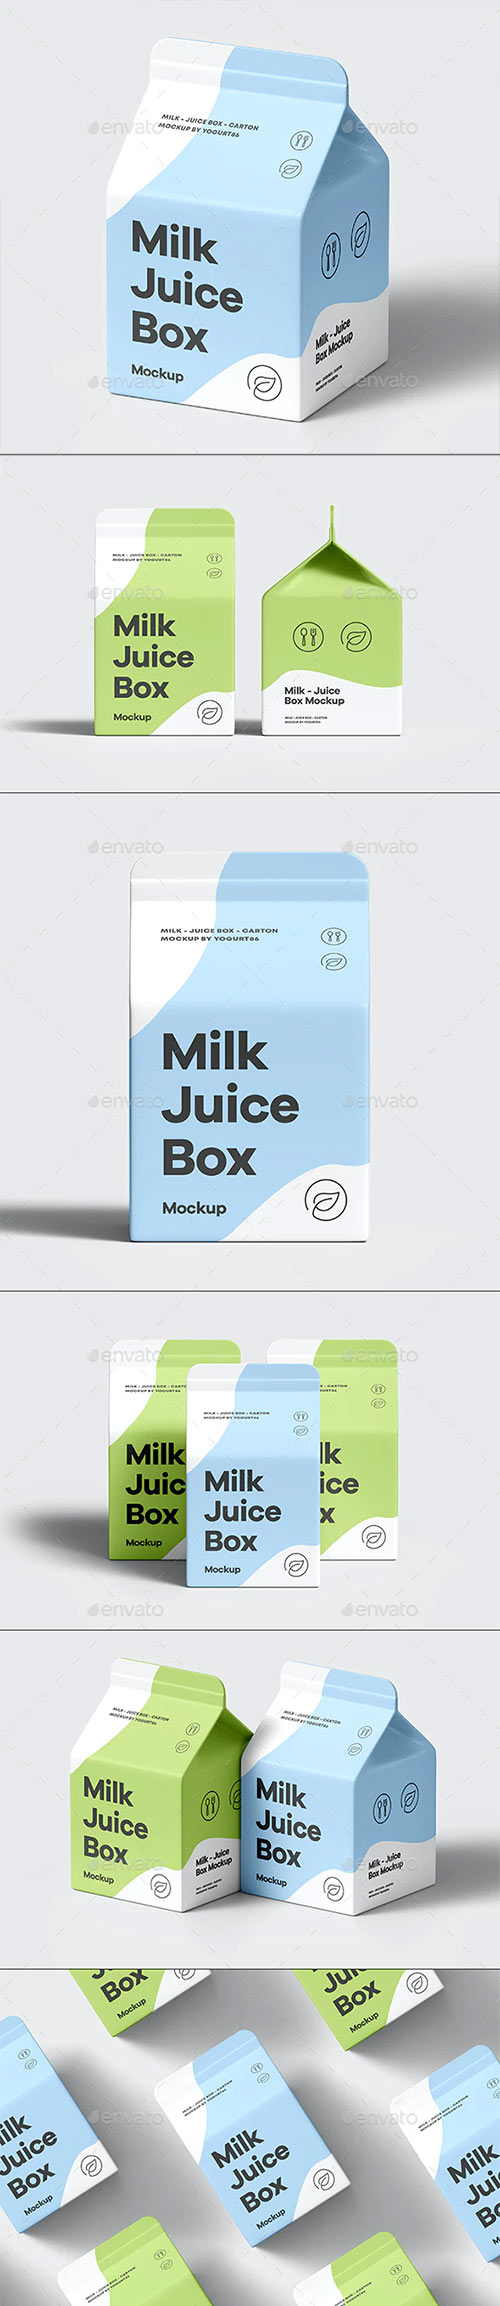 Milk Juice Box Mock-up 39926306